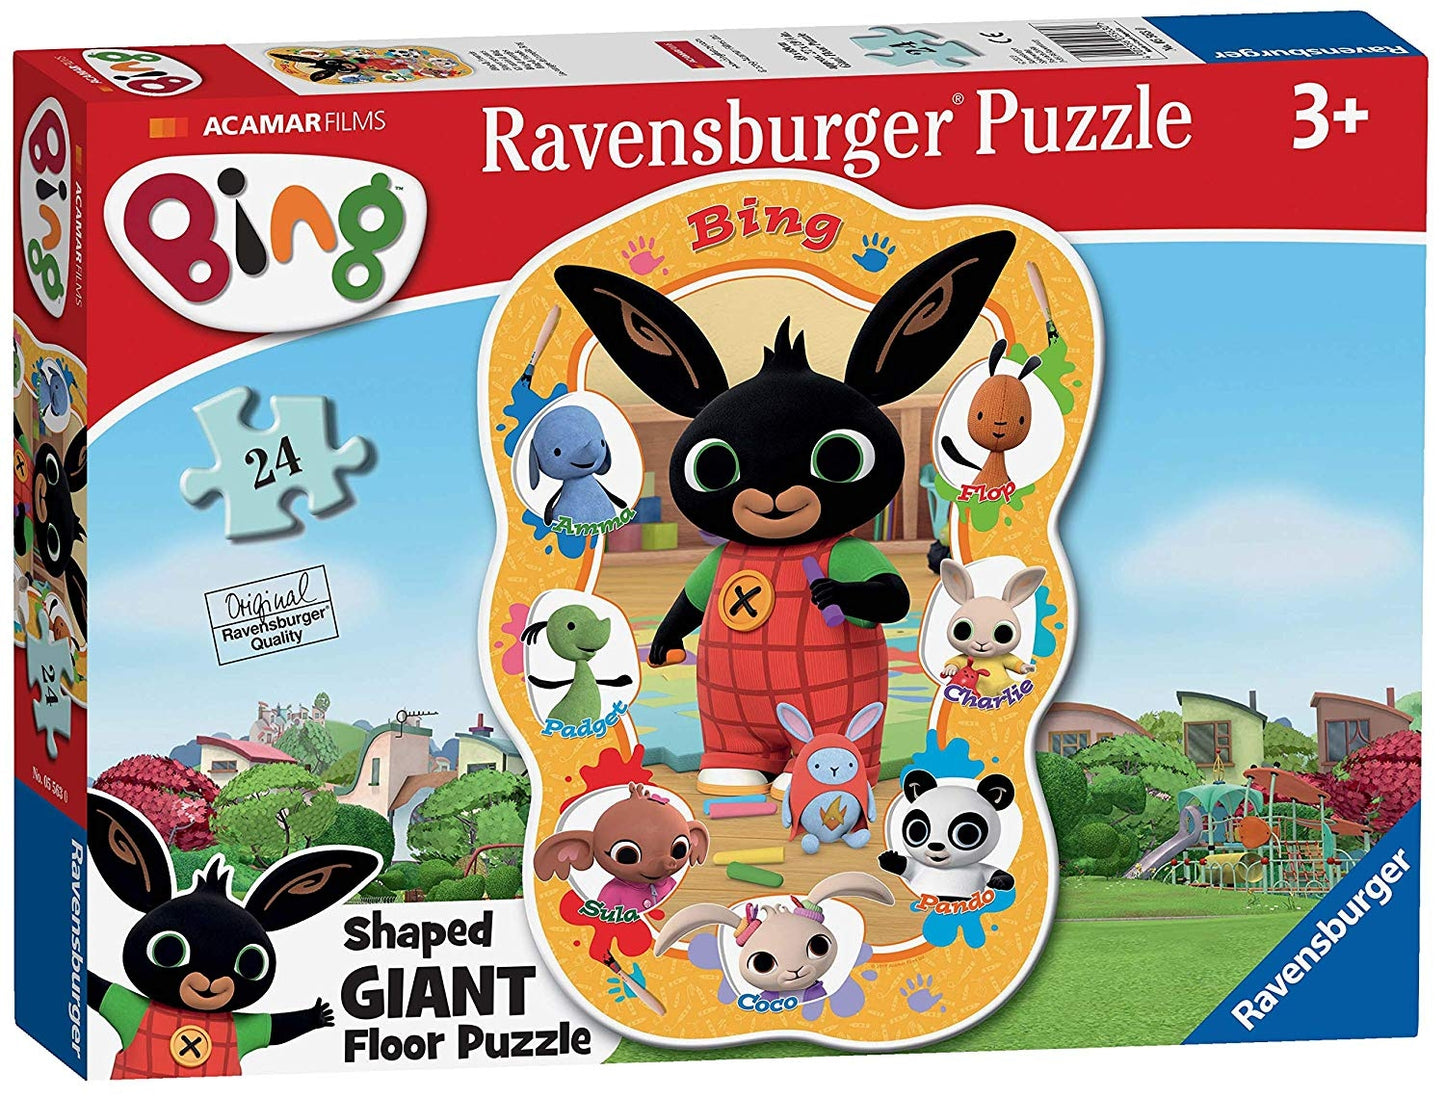 Ravensburger Bing Bunny, 24pc Giant Floor Jigsaw Puzzle